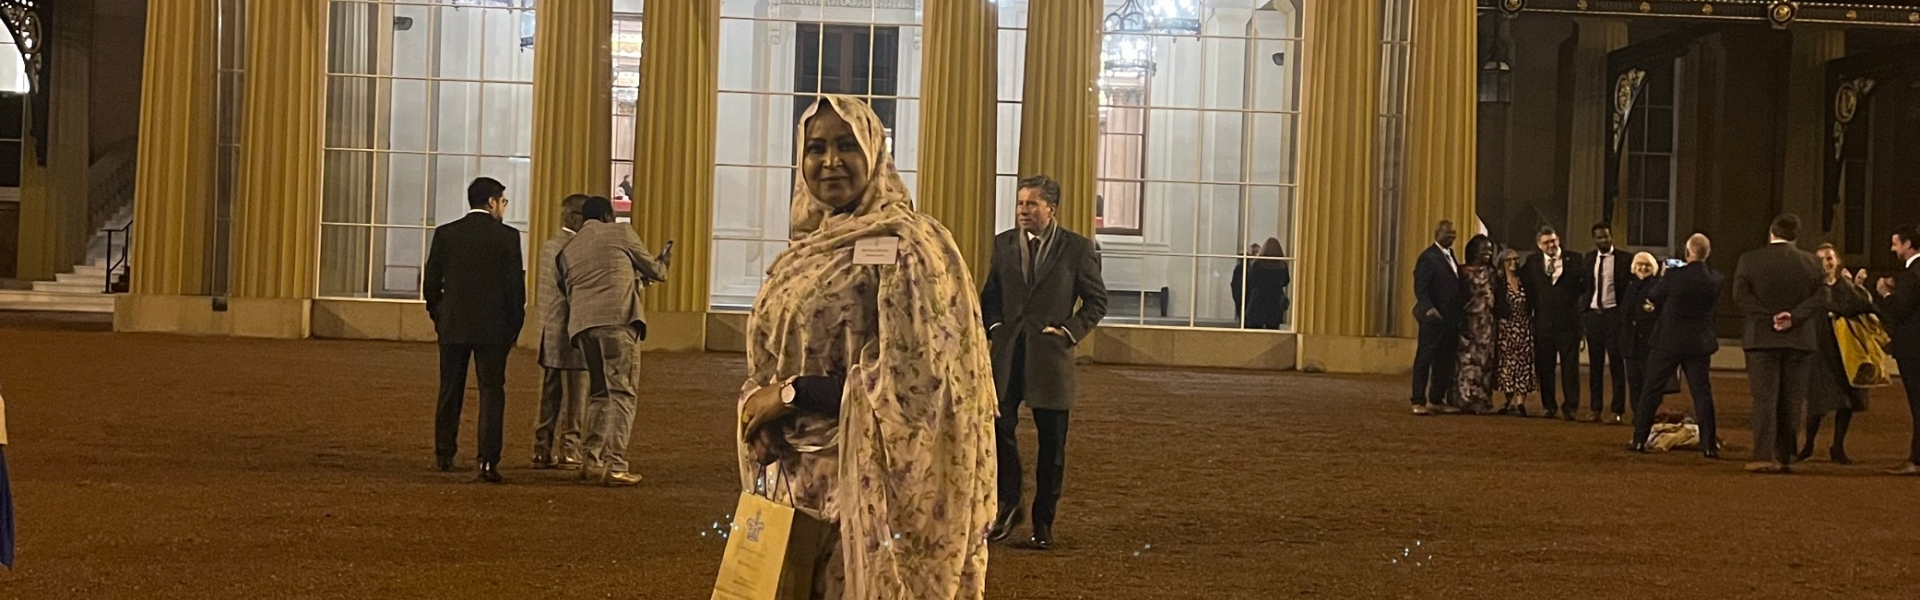 Maha Khalifa at Buckingham Palace